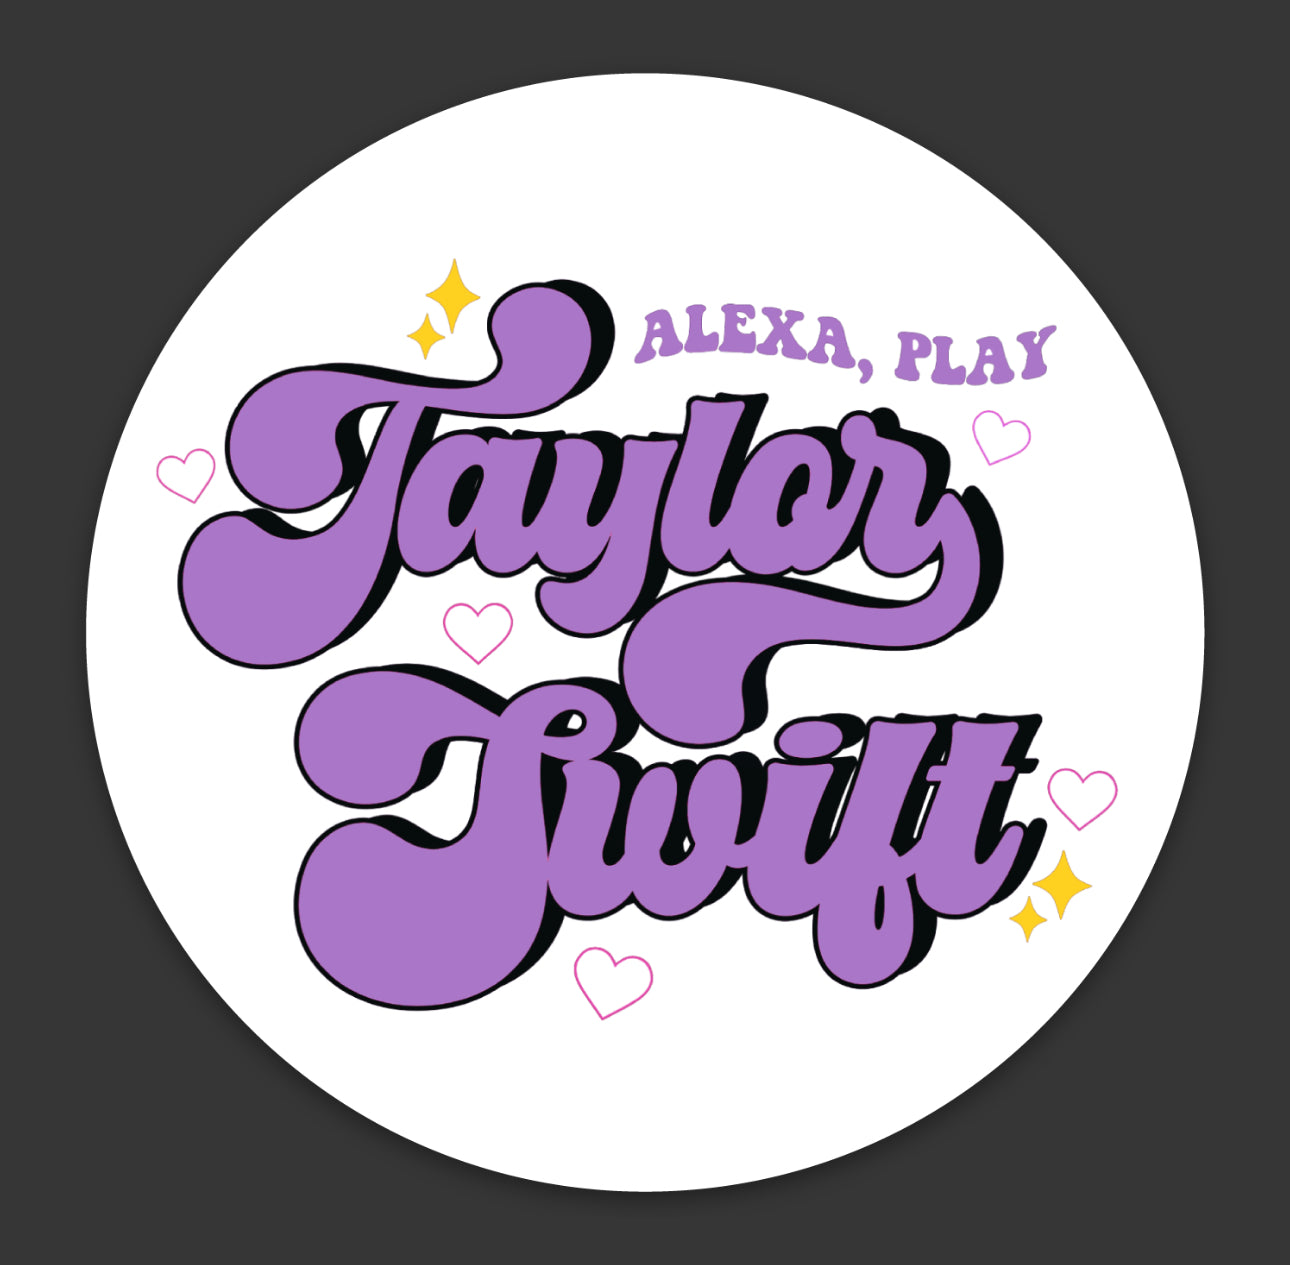 Taylor swift 22 | Sticker